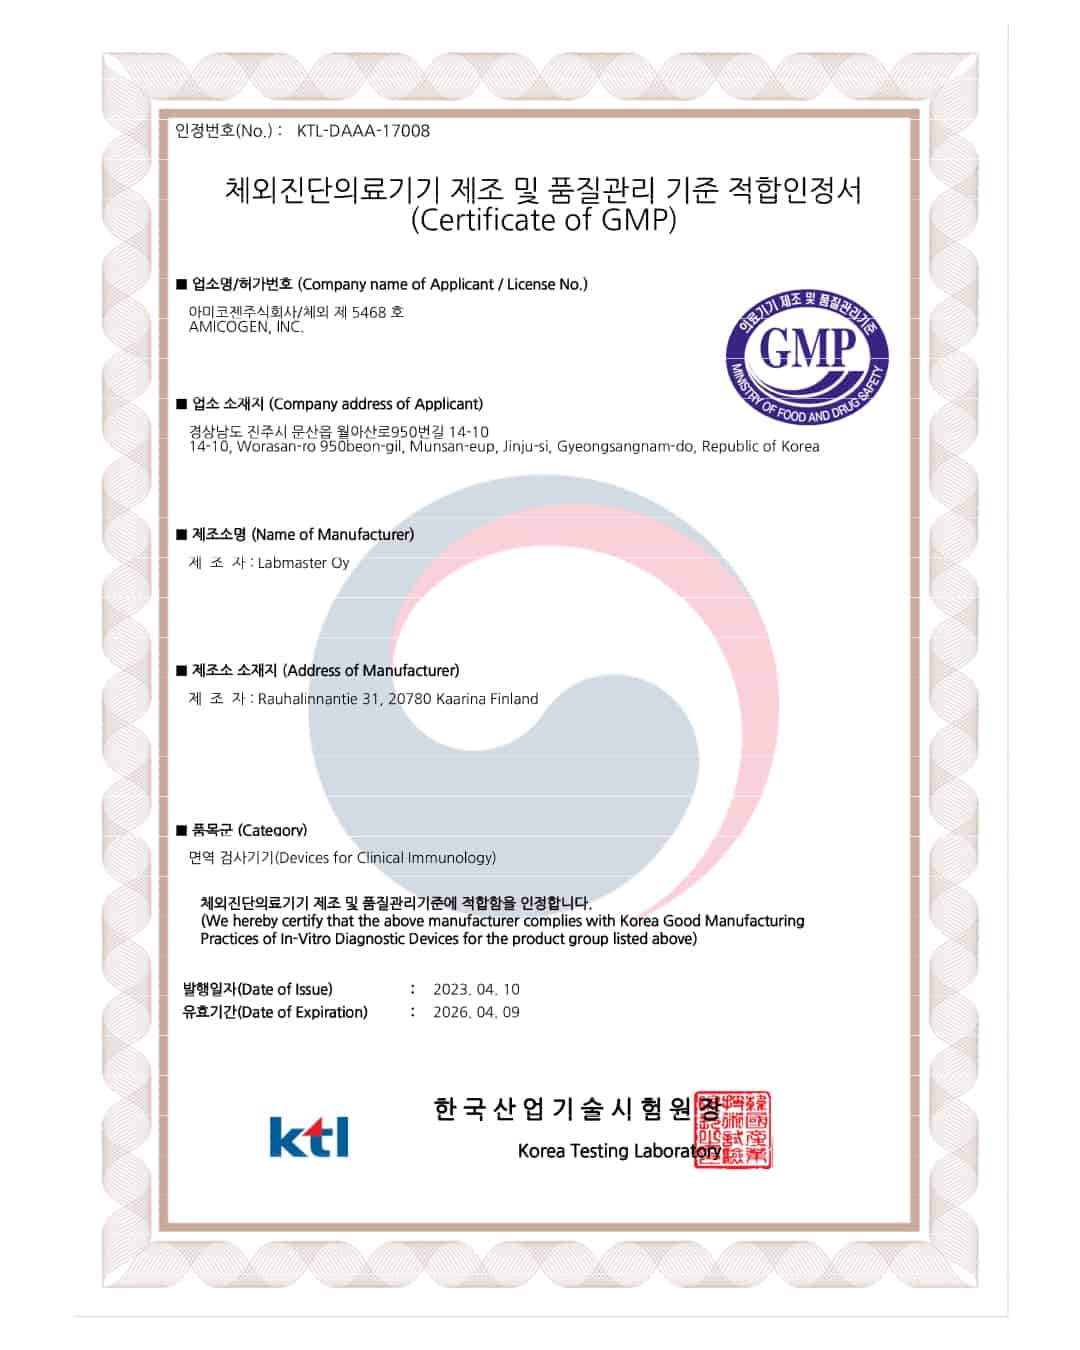 Labmaster's GMP certificate for Korea